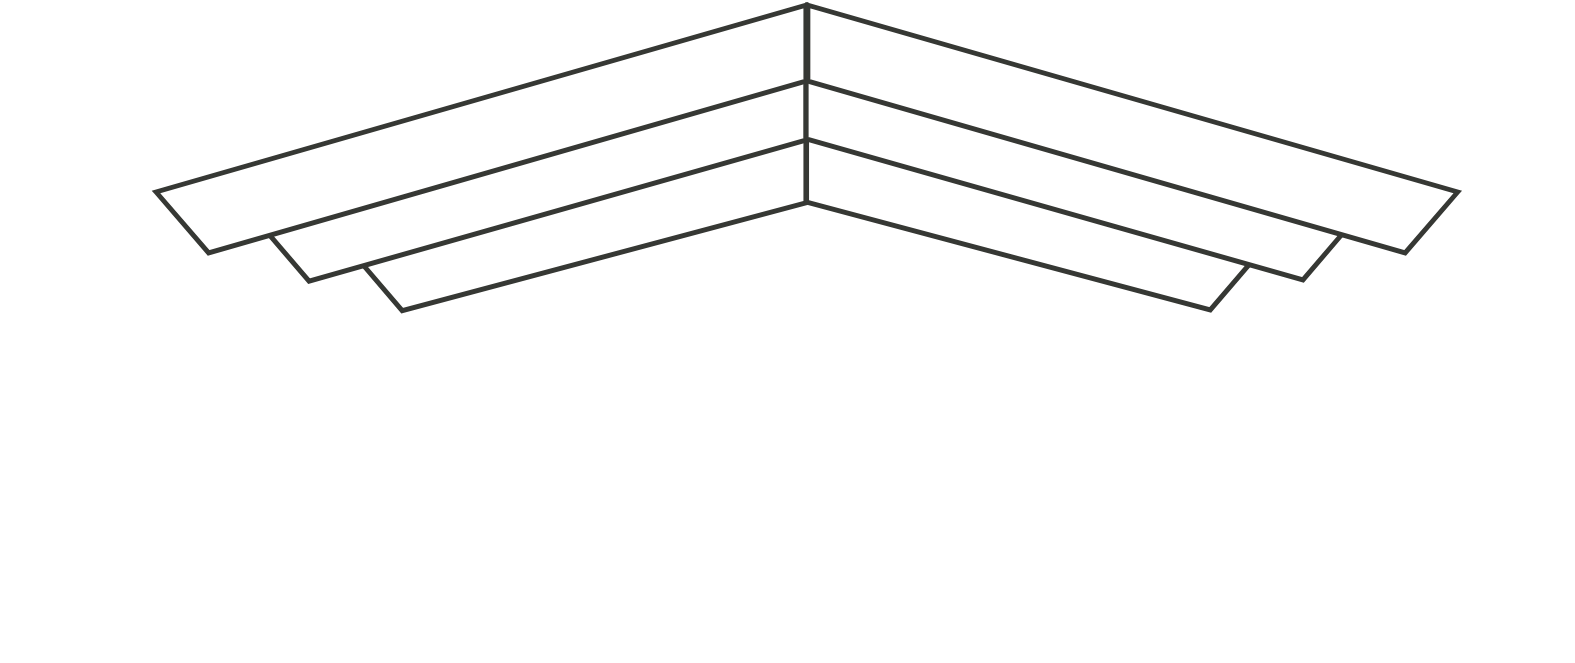 Cabana Target Drawdown logo grand pour les fonds sombres (PNG transparent)